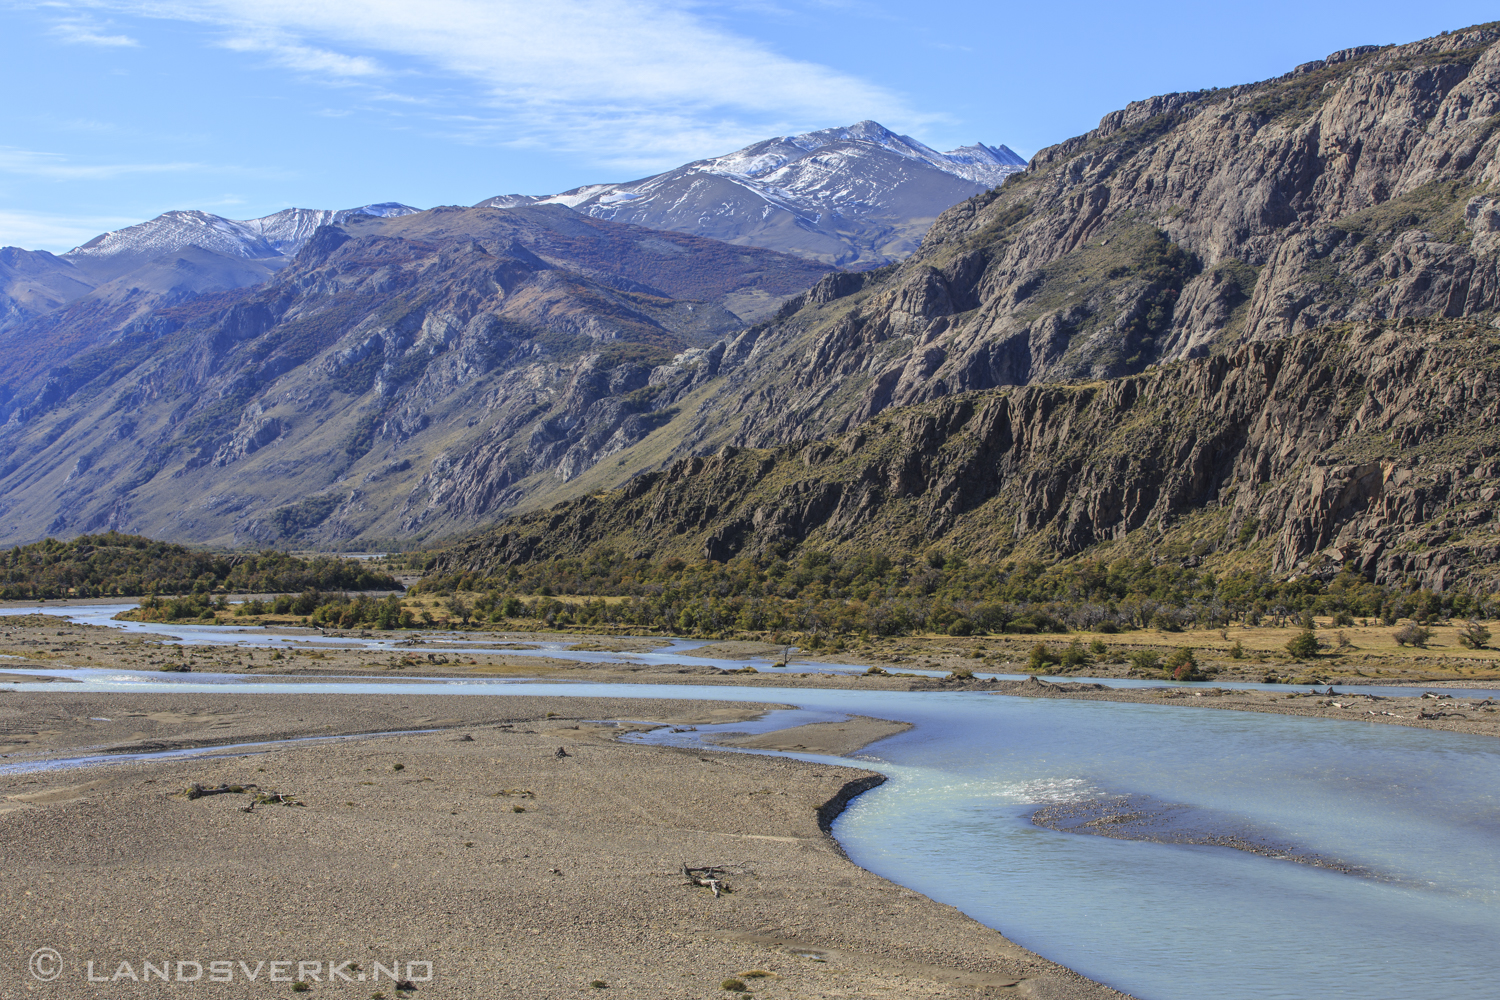 Hiking in El Chalten, Argentina. 

(Canon EOS 5D Mark III / Canon EF 70-200mm f/2.8 L IS II USM)